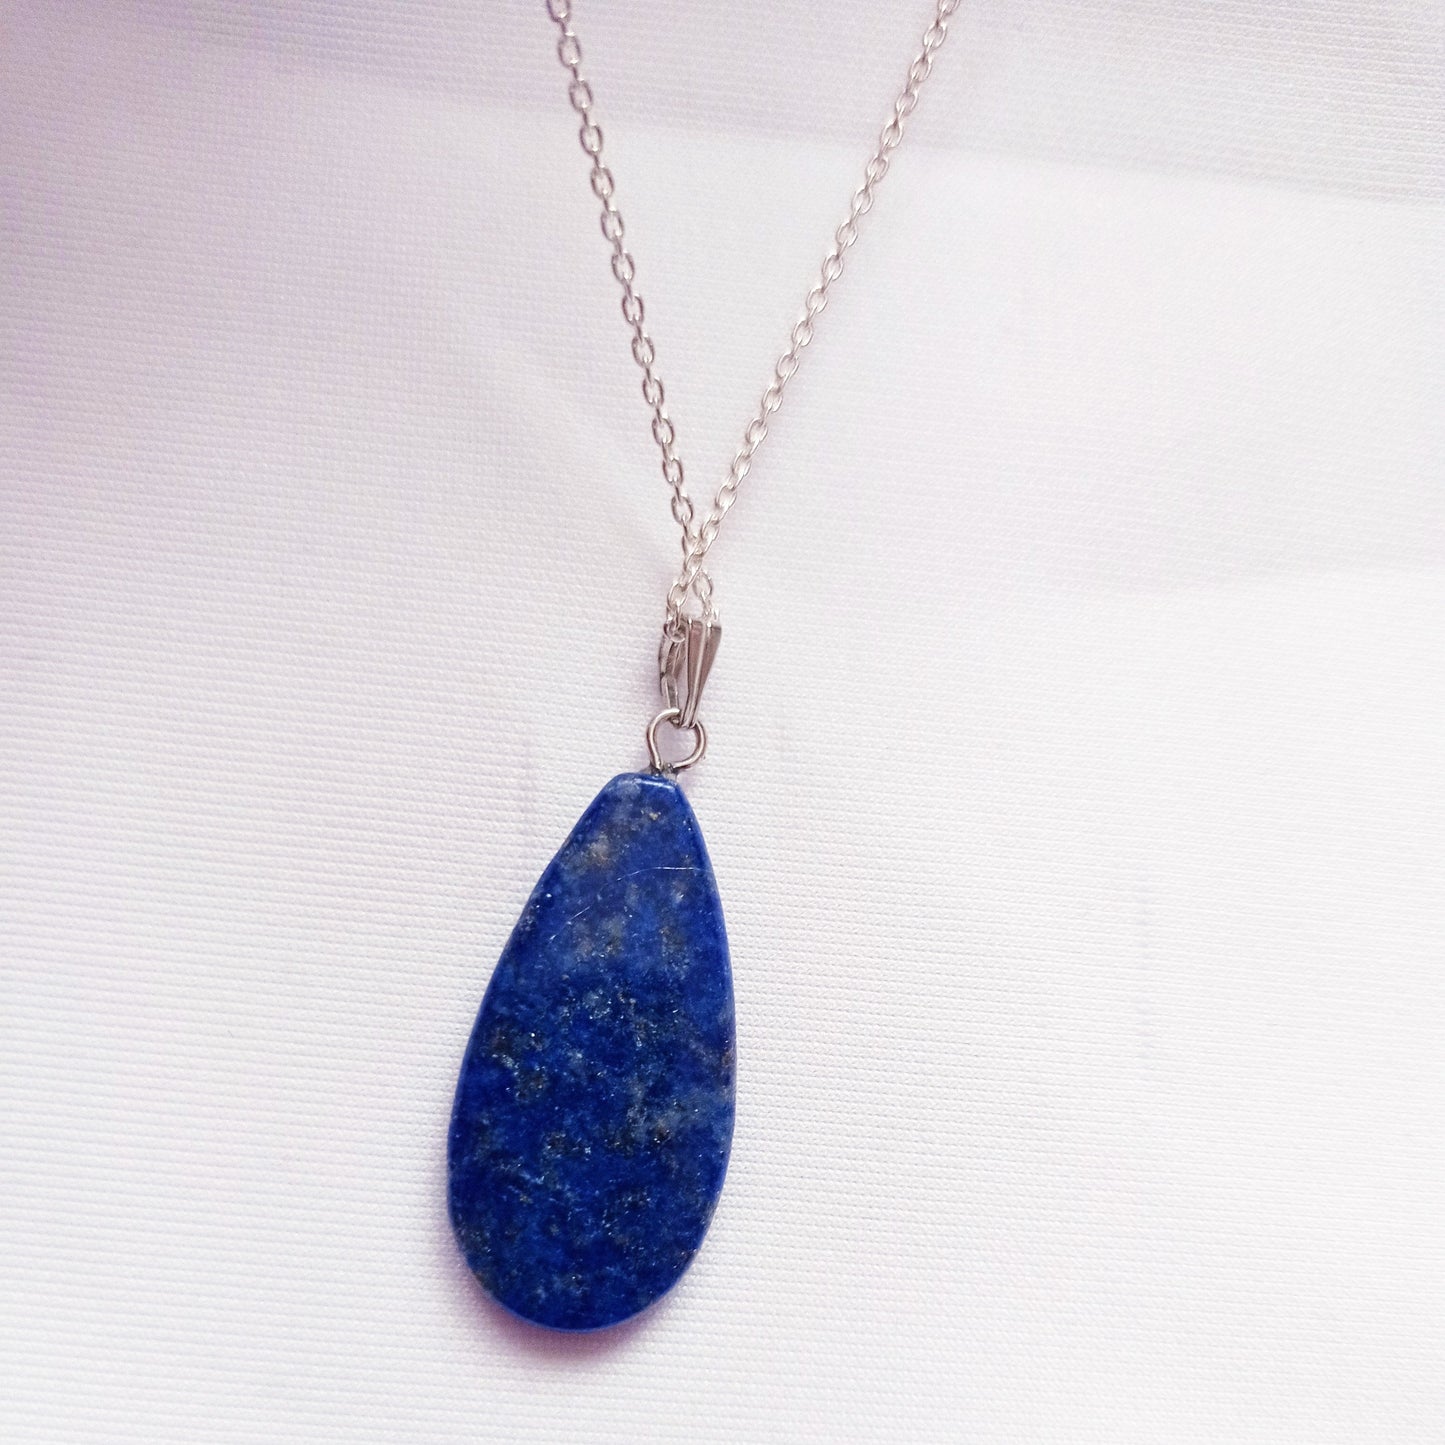 Lapis Lazuli Necklace, Lapis Lazuli Sterling Silver necklace, Lapis Lazuli Teardrop Pendant Necklace | by nlanlaVictory-4